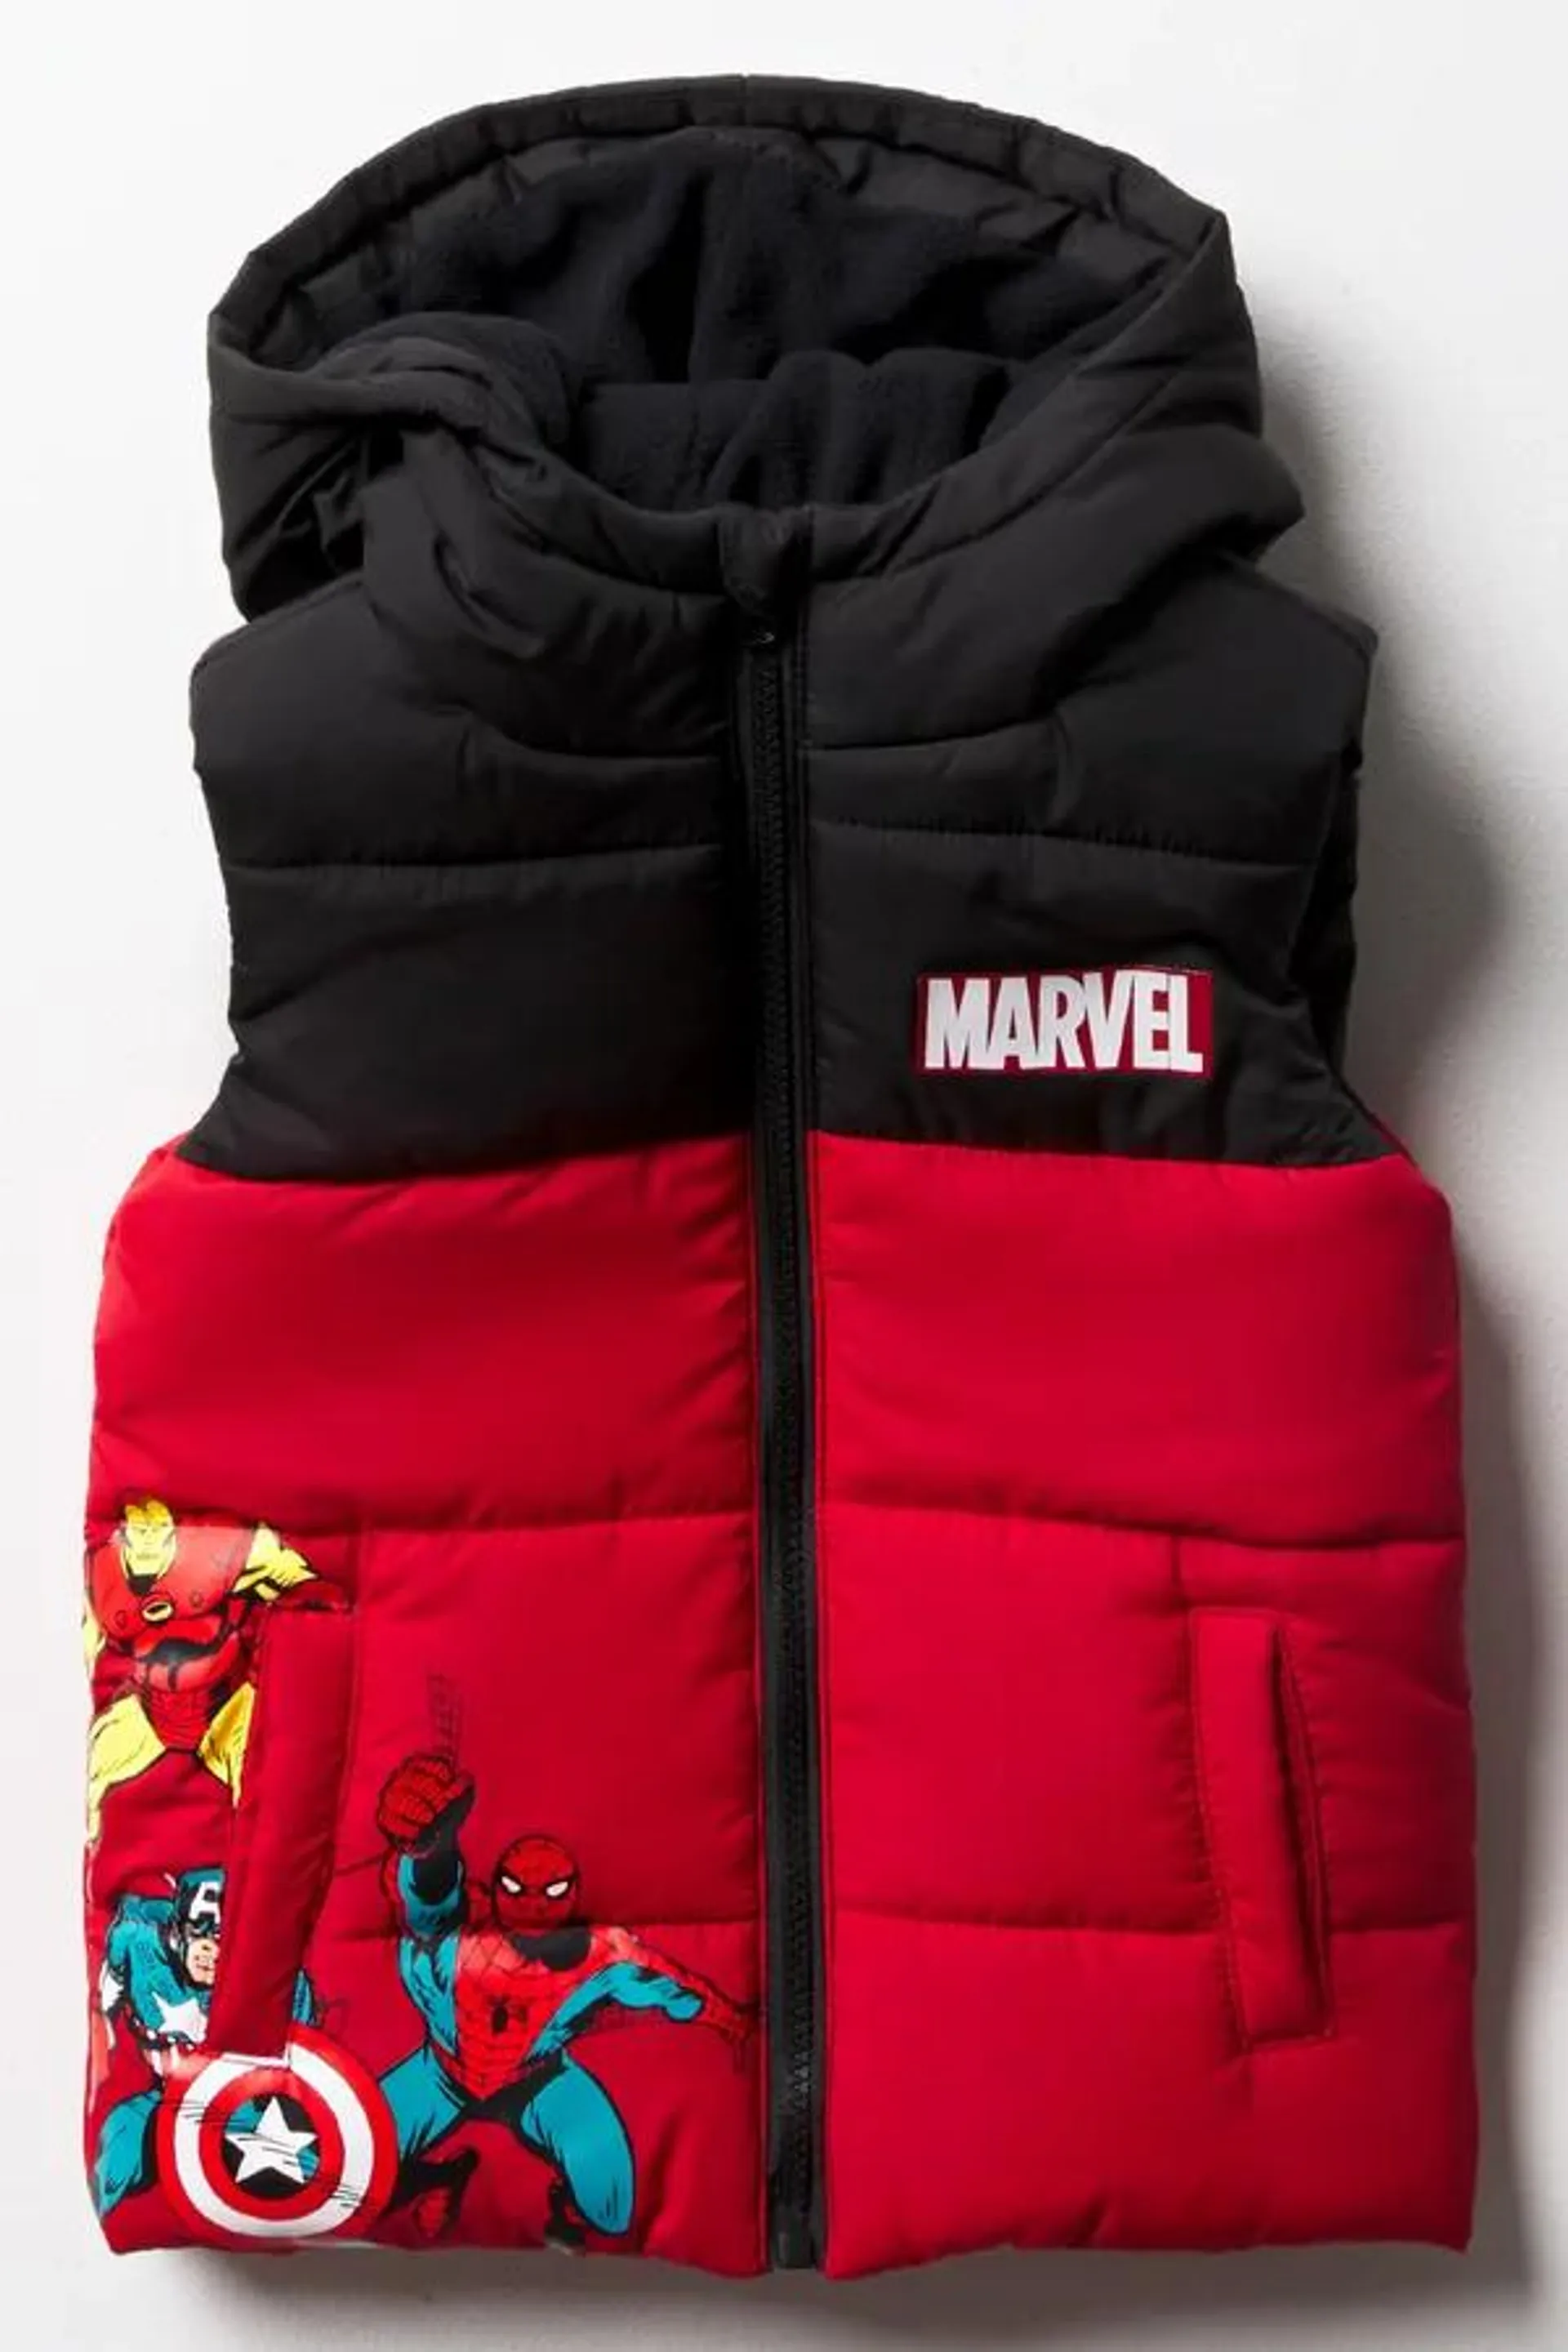 Avengers sleeveless jacket red